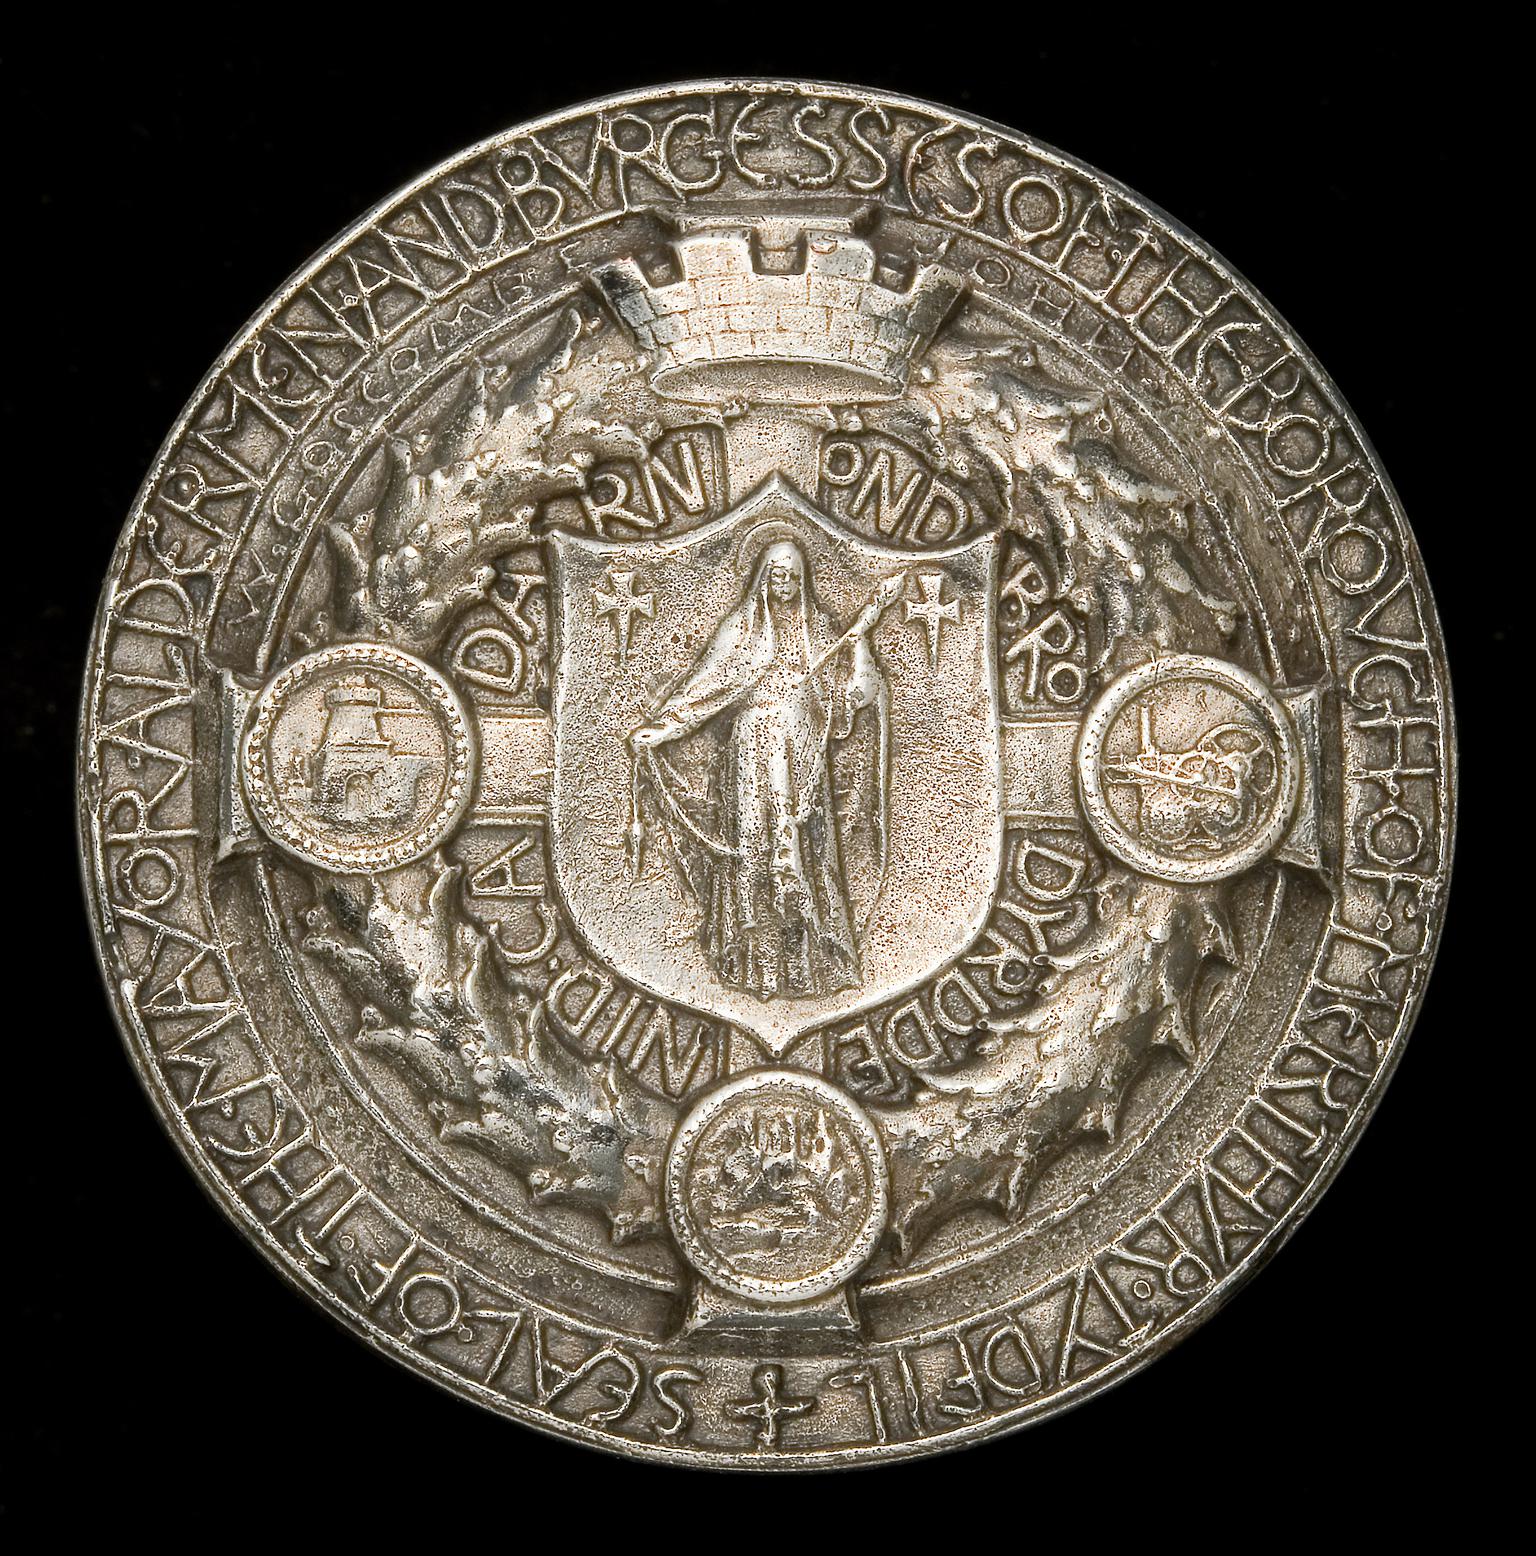 Seal of the Merthyr Tydfil Corporation